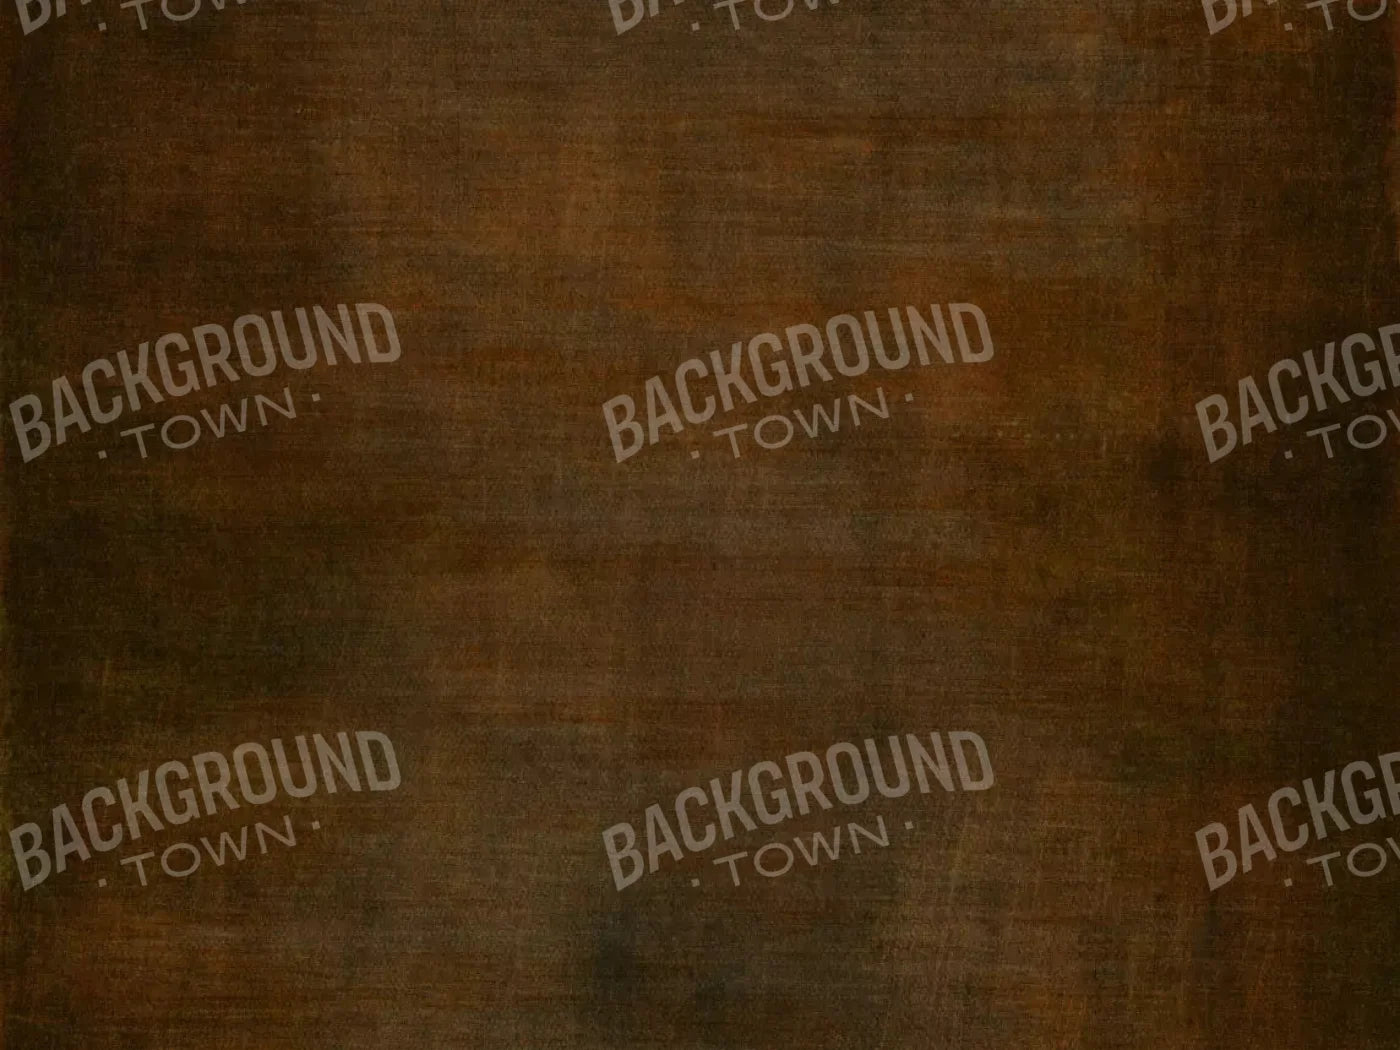 Cinnamon Stick 68X5 Fleece ( 80 X 60 Inch ) Backdrop